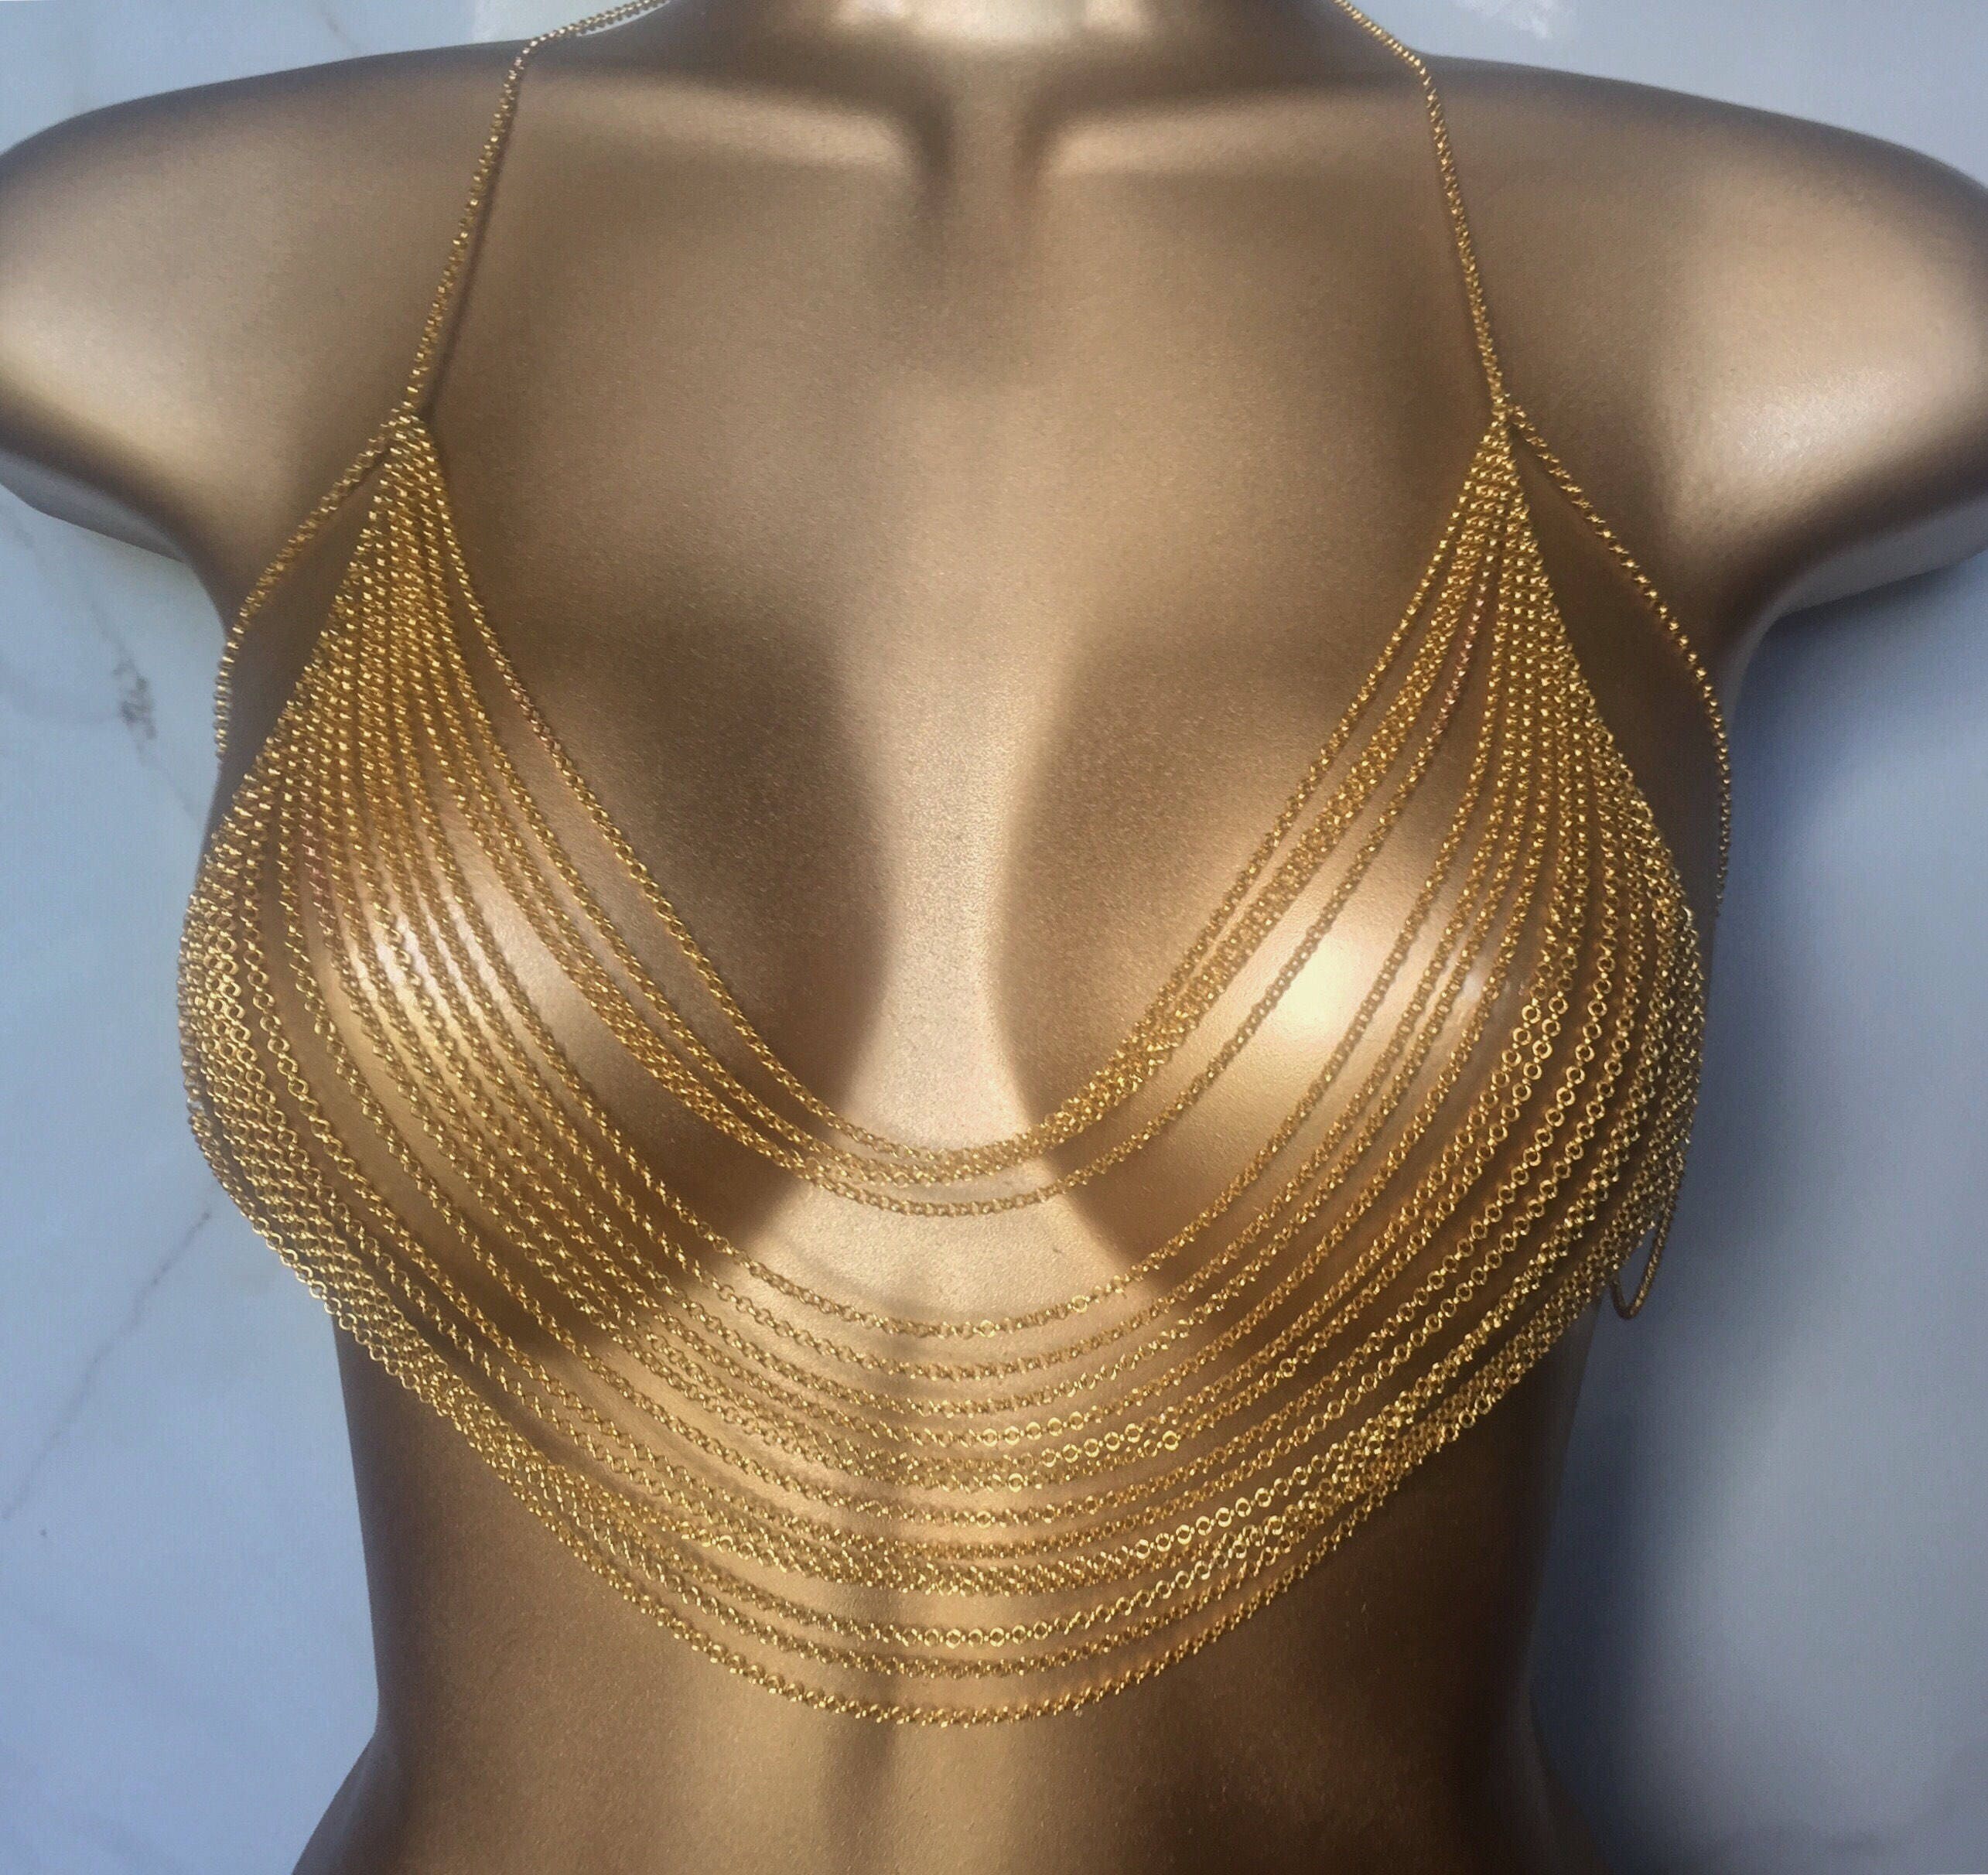 Goddess Bra Chain Top Body Jewelry Jewelry Bra Body Chain Bra Layered Chain  Top Sexy Lingerie Body Harness Gifts for Her 